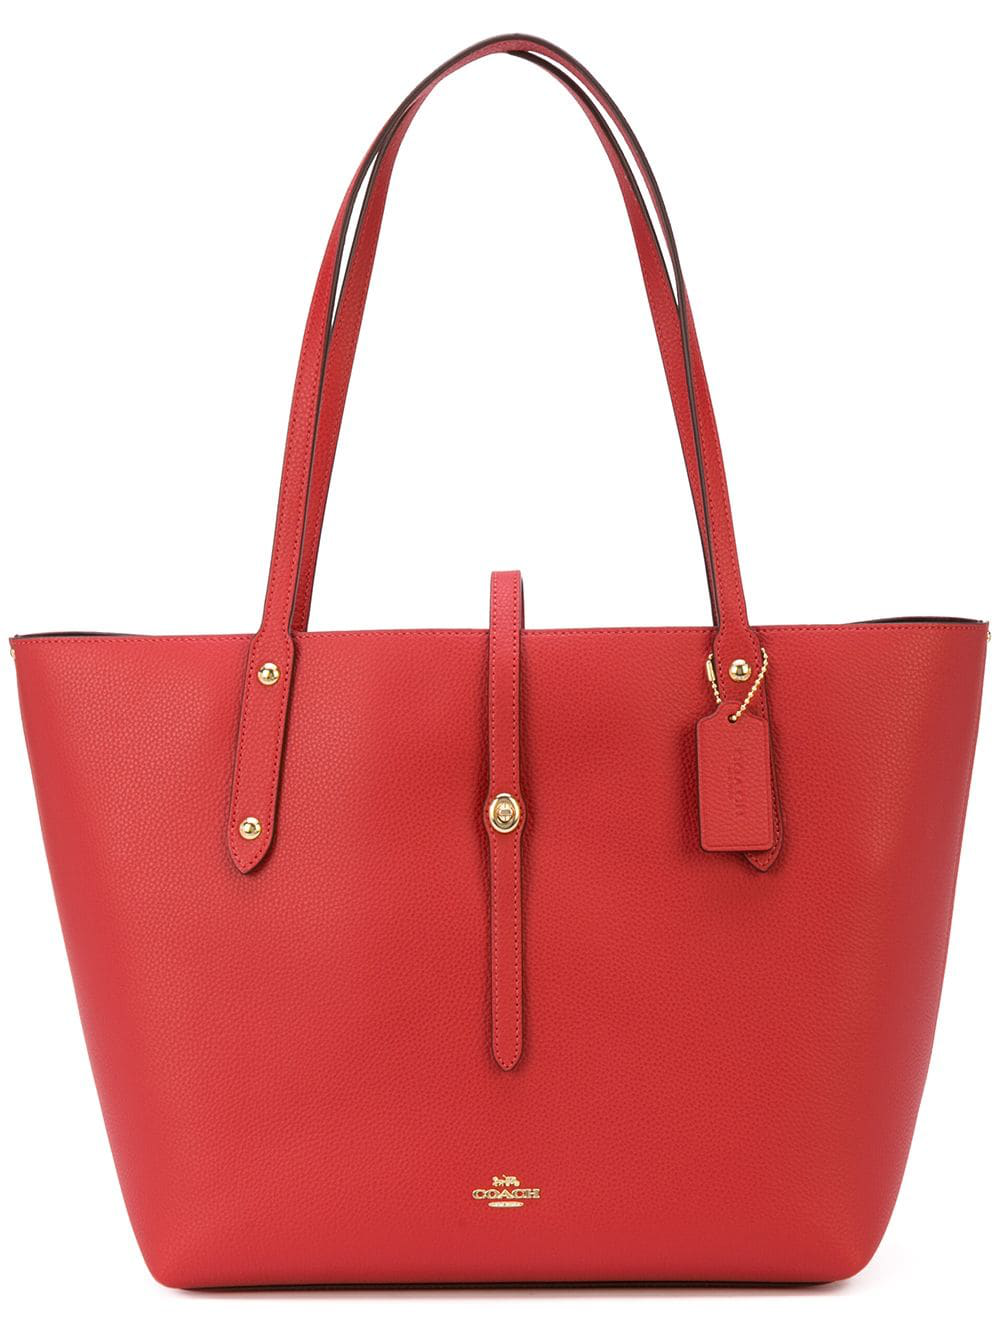 Coach Market Tote Bag - Red | ModeSens